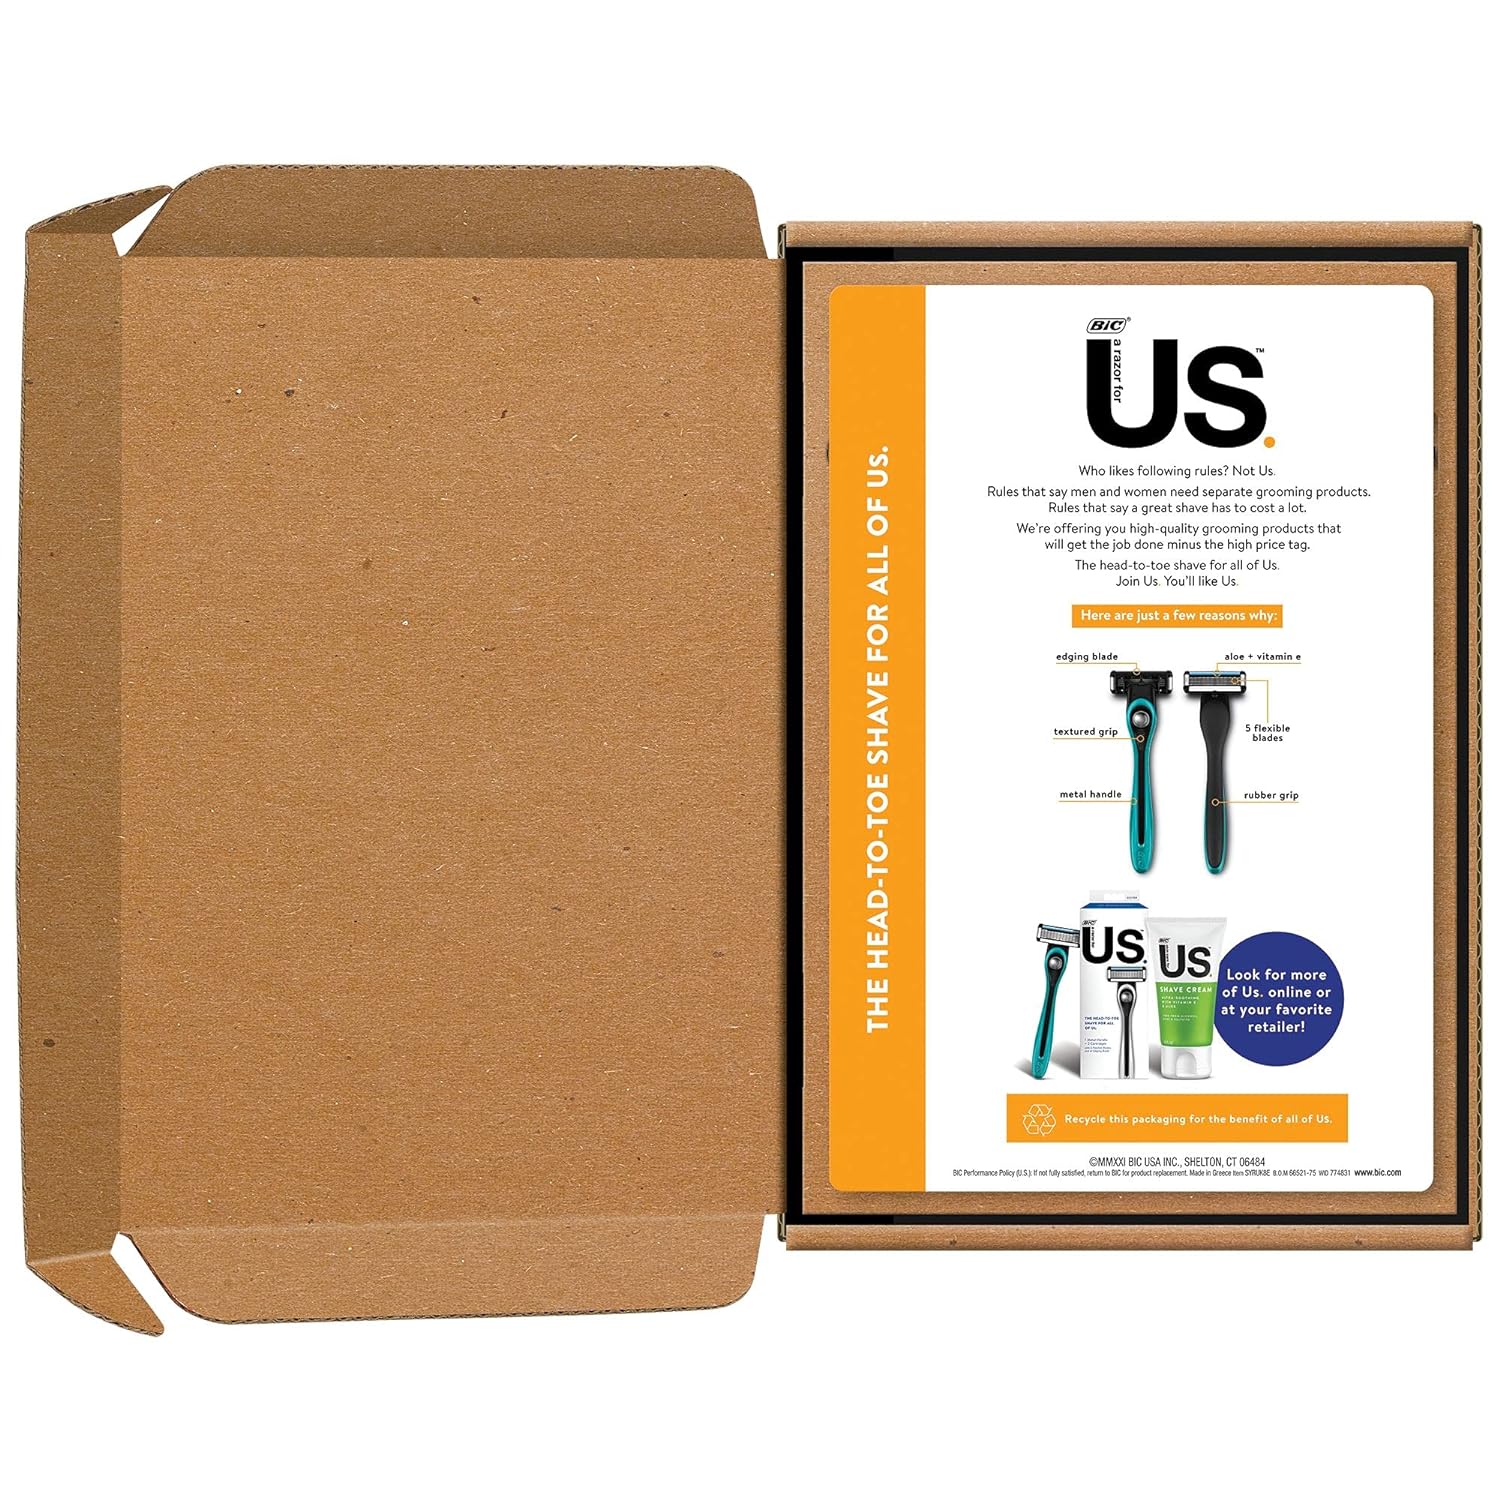 BIC Us 5-Blade Unisex Razor Starter Kit for Men and Women, 1 Handle & 8 Cartridges, Teal, Smooth Shave, BIC Razors